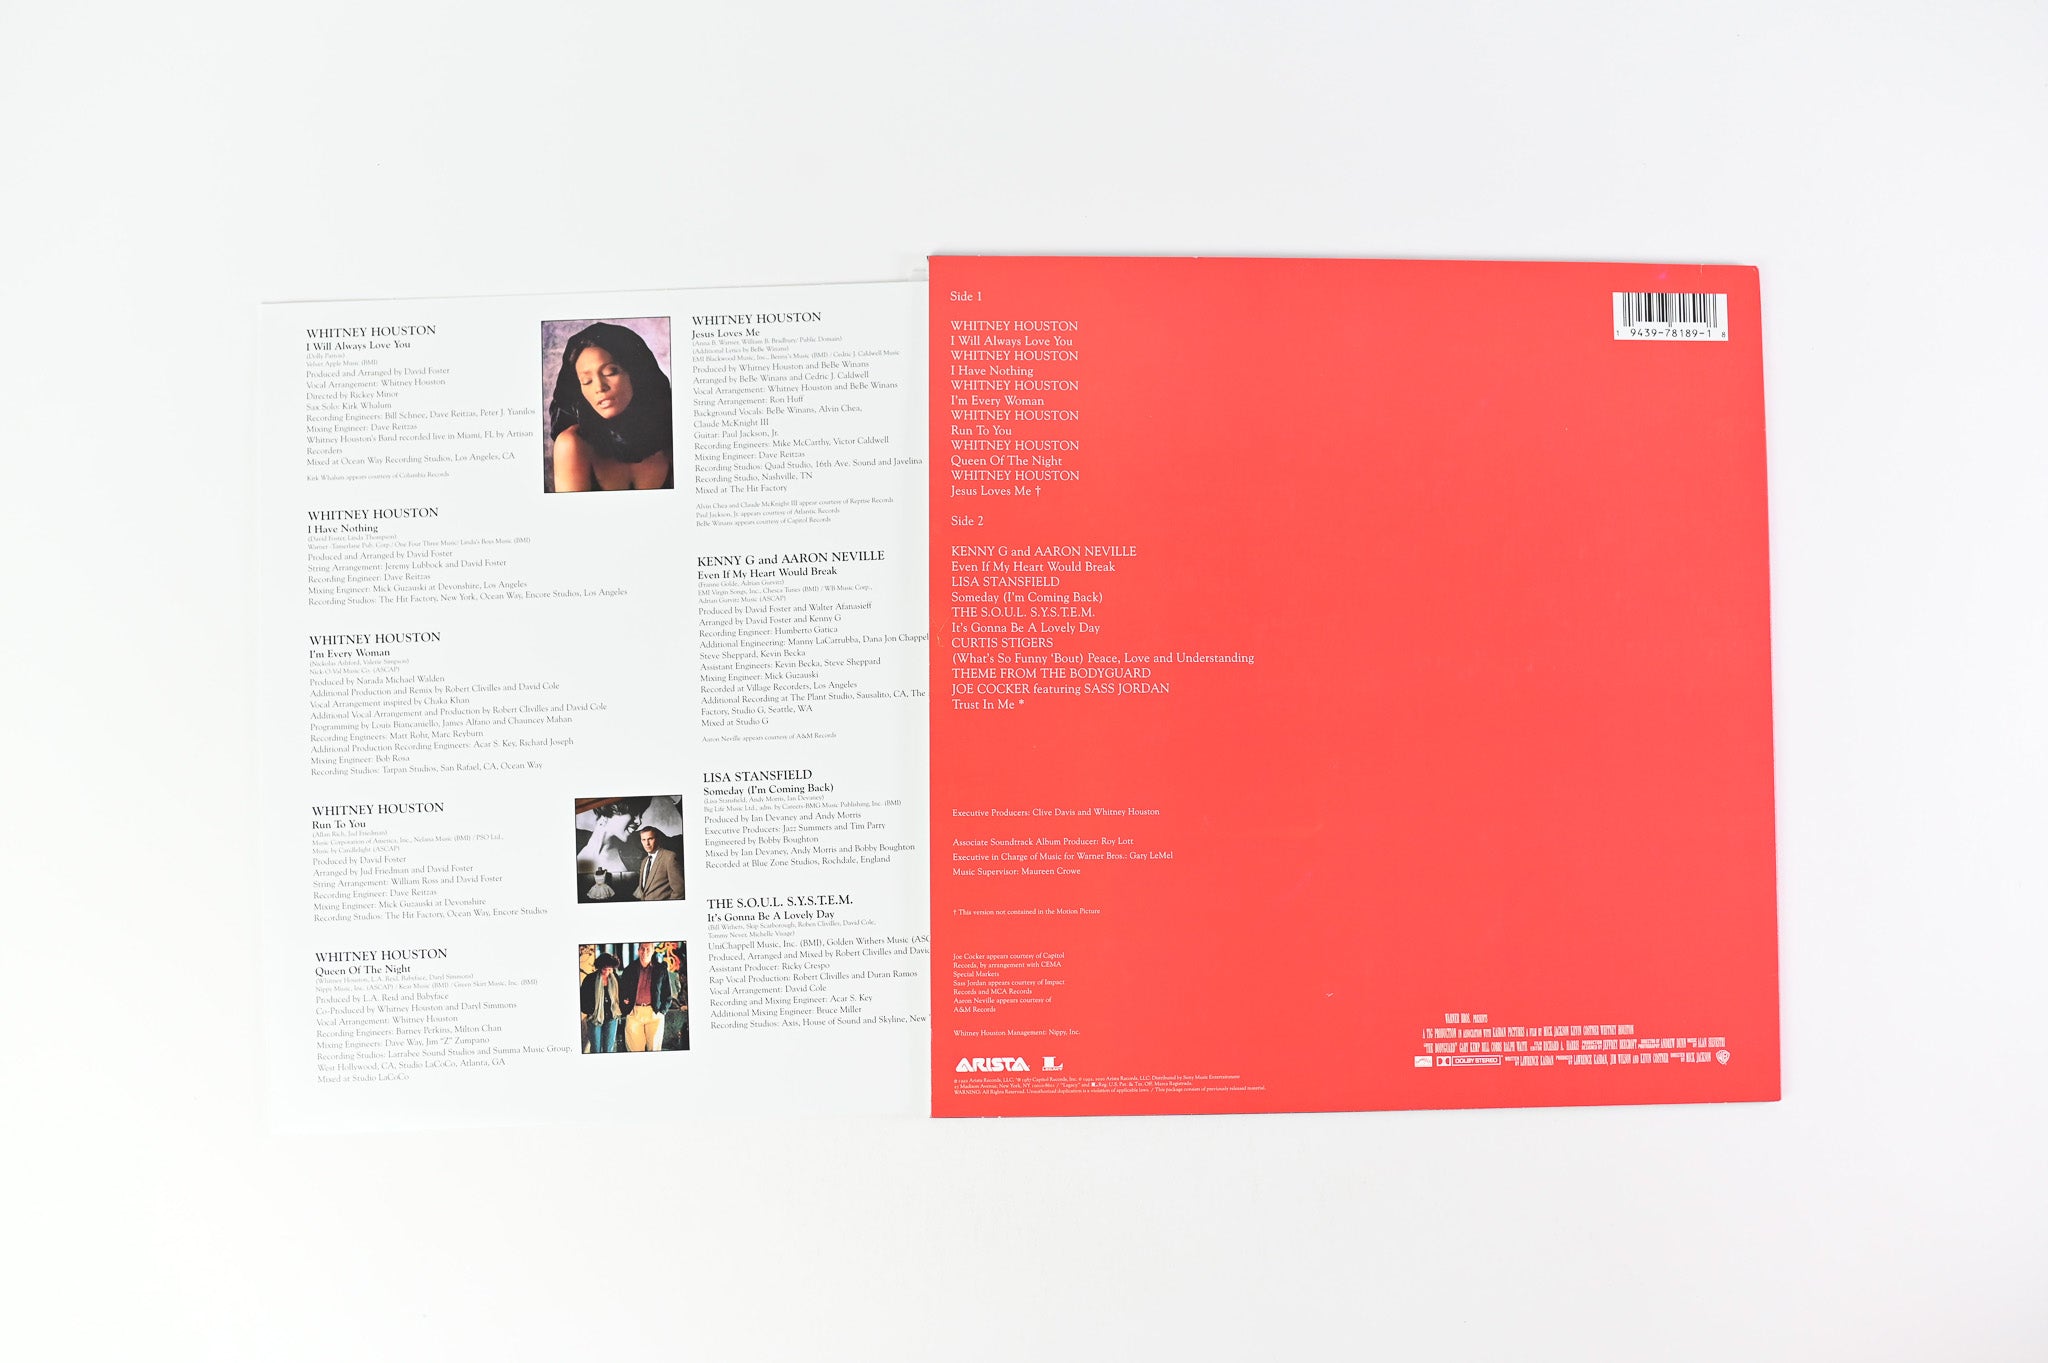 Various - The Bodyguard (Original Soundtrack Album) on Atlantic Legacy Red Vinyl Reissue